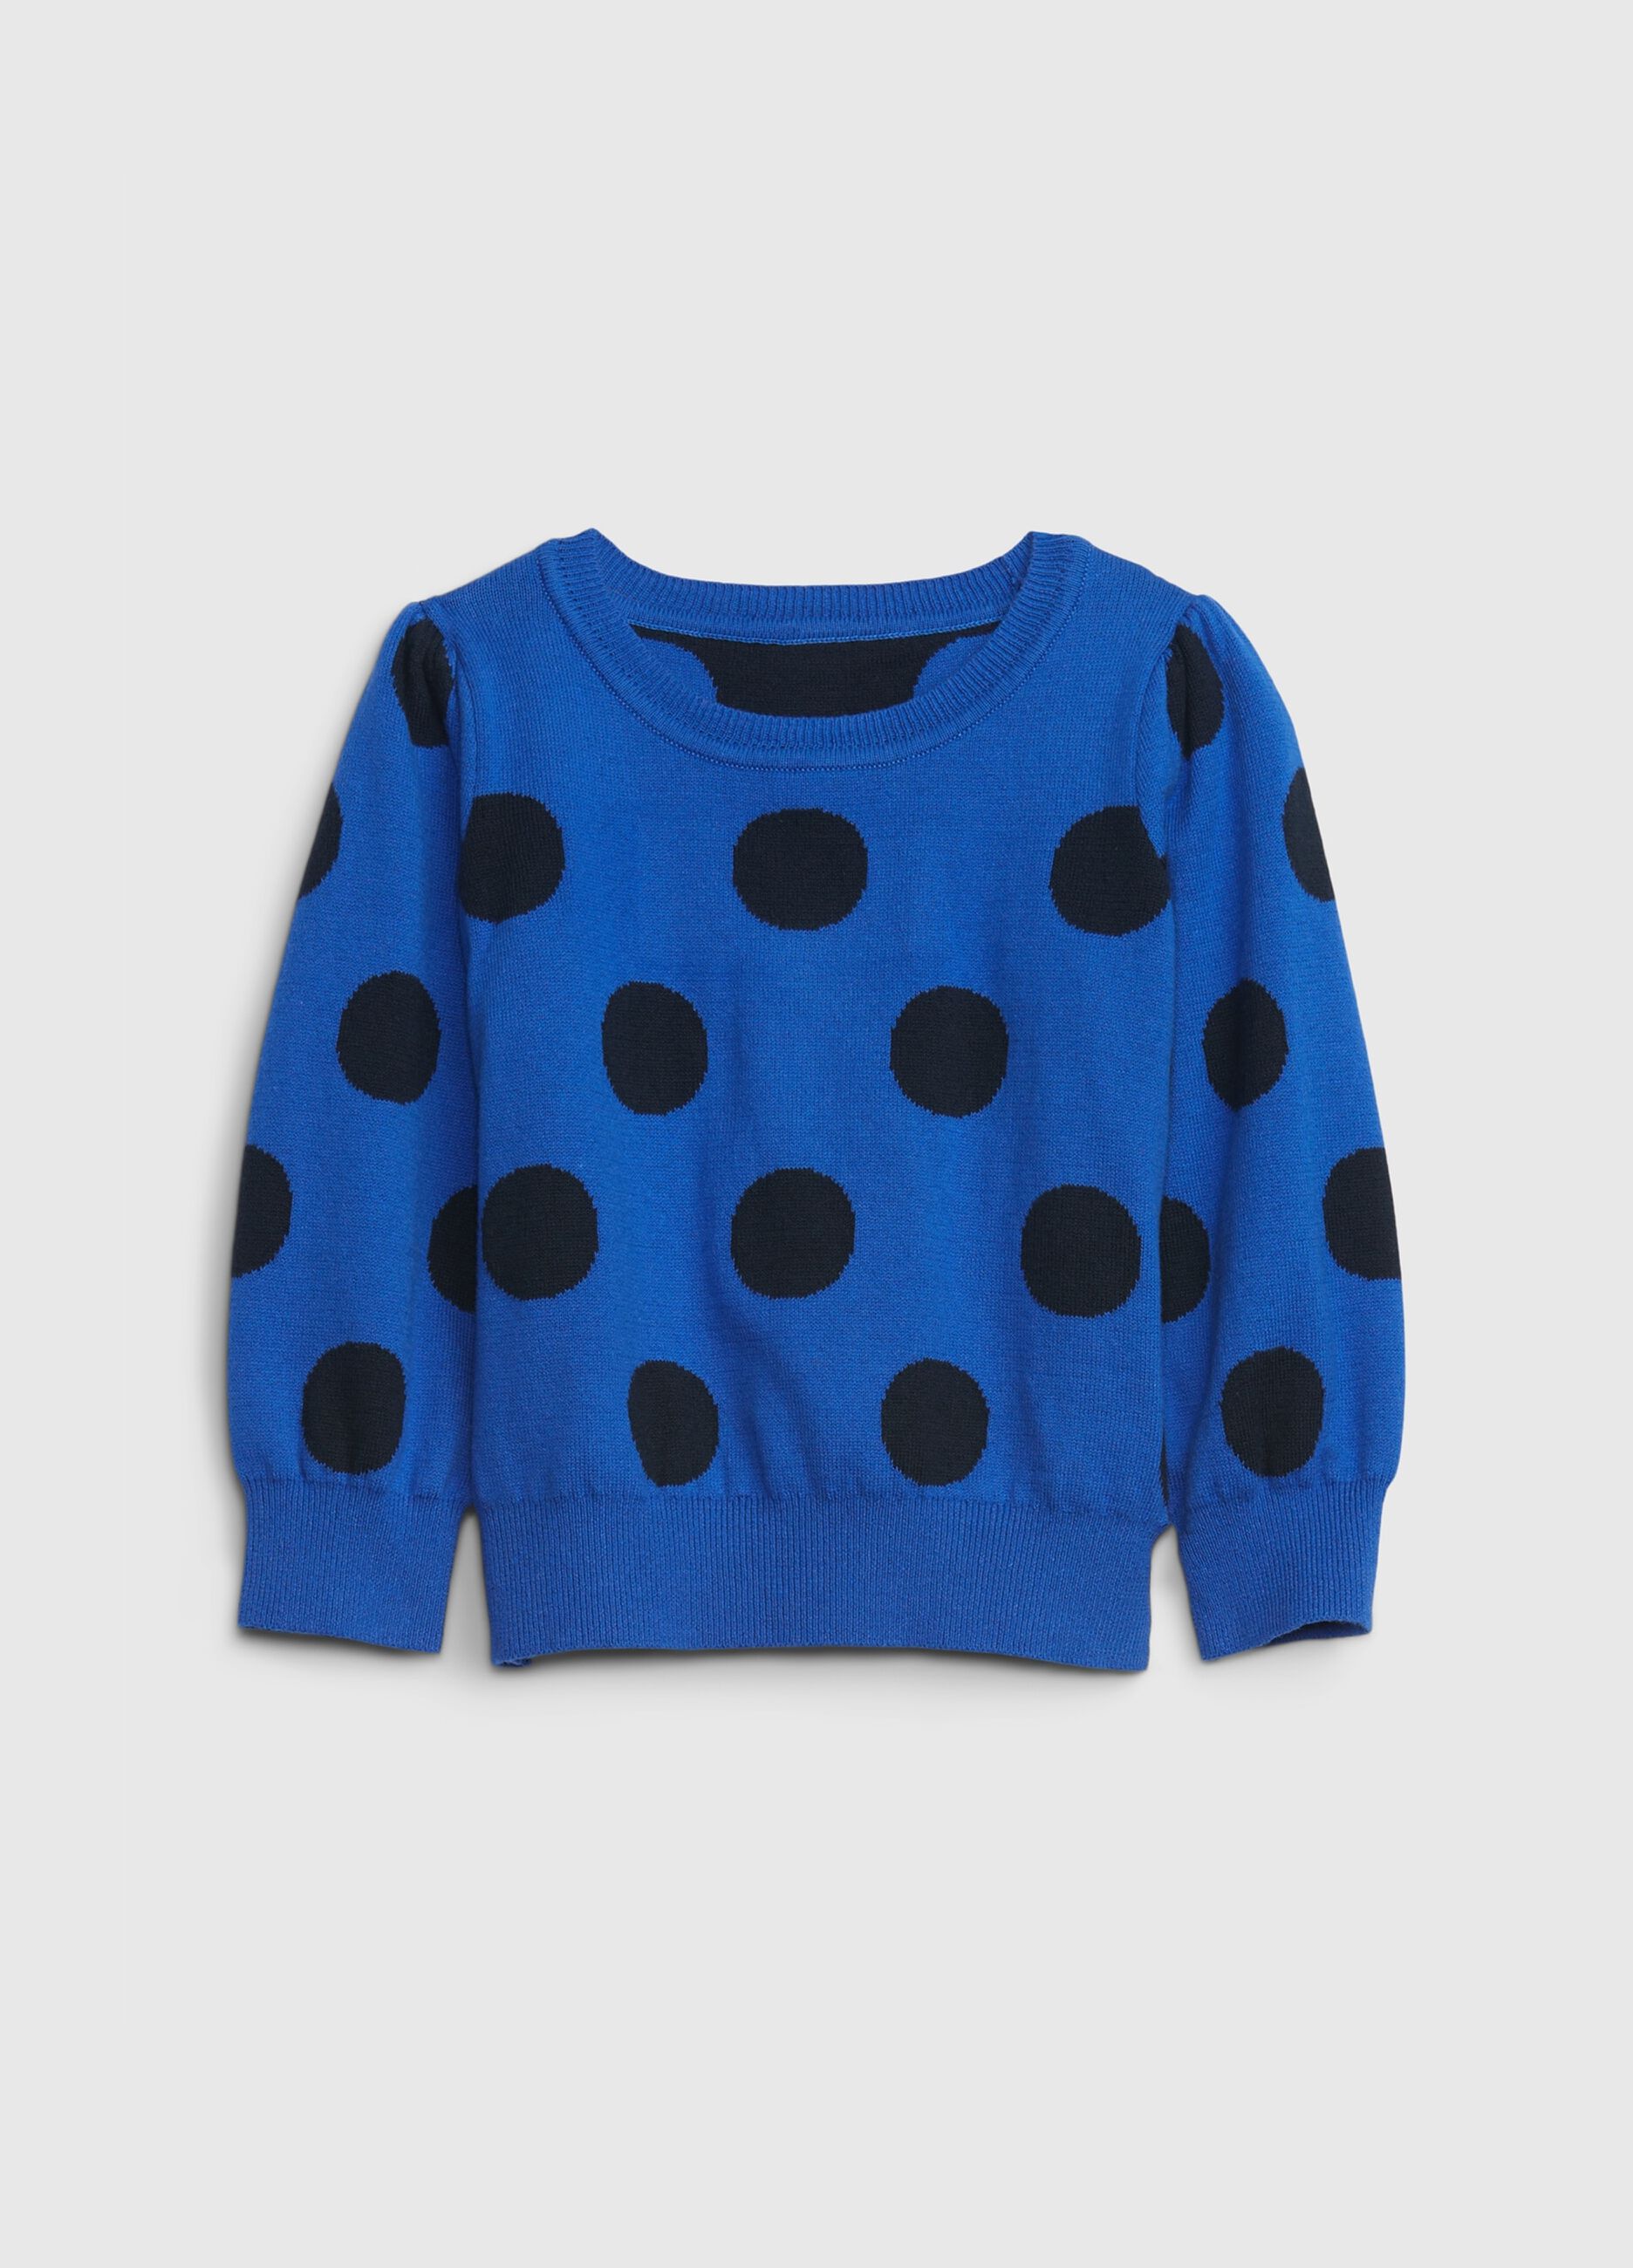 Top with jacquard polka dot pattern.